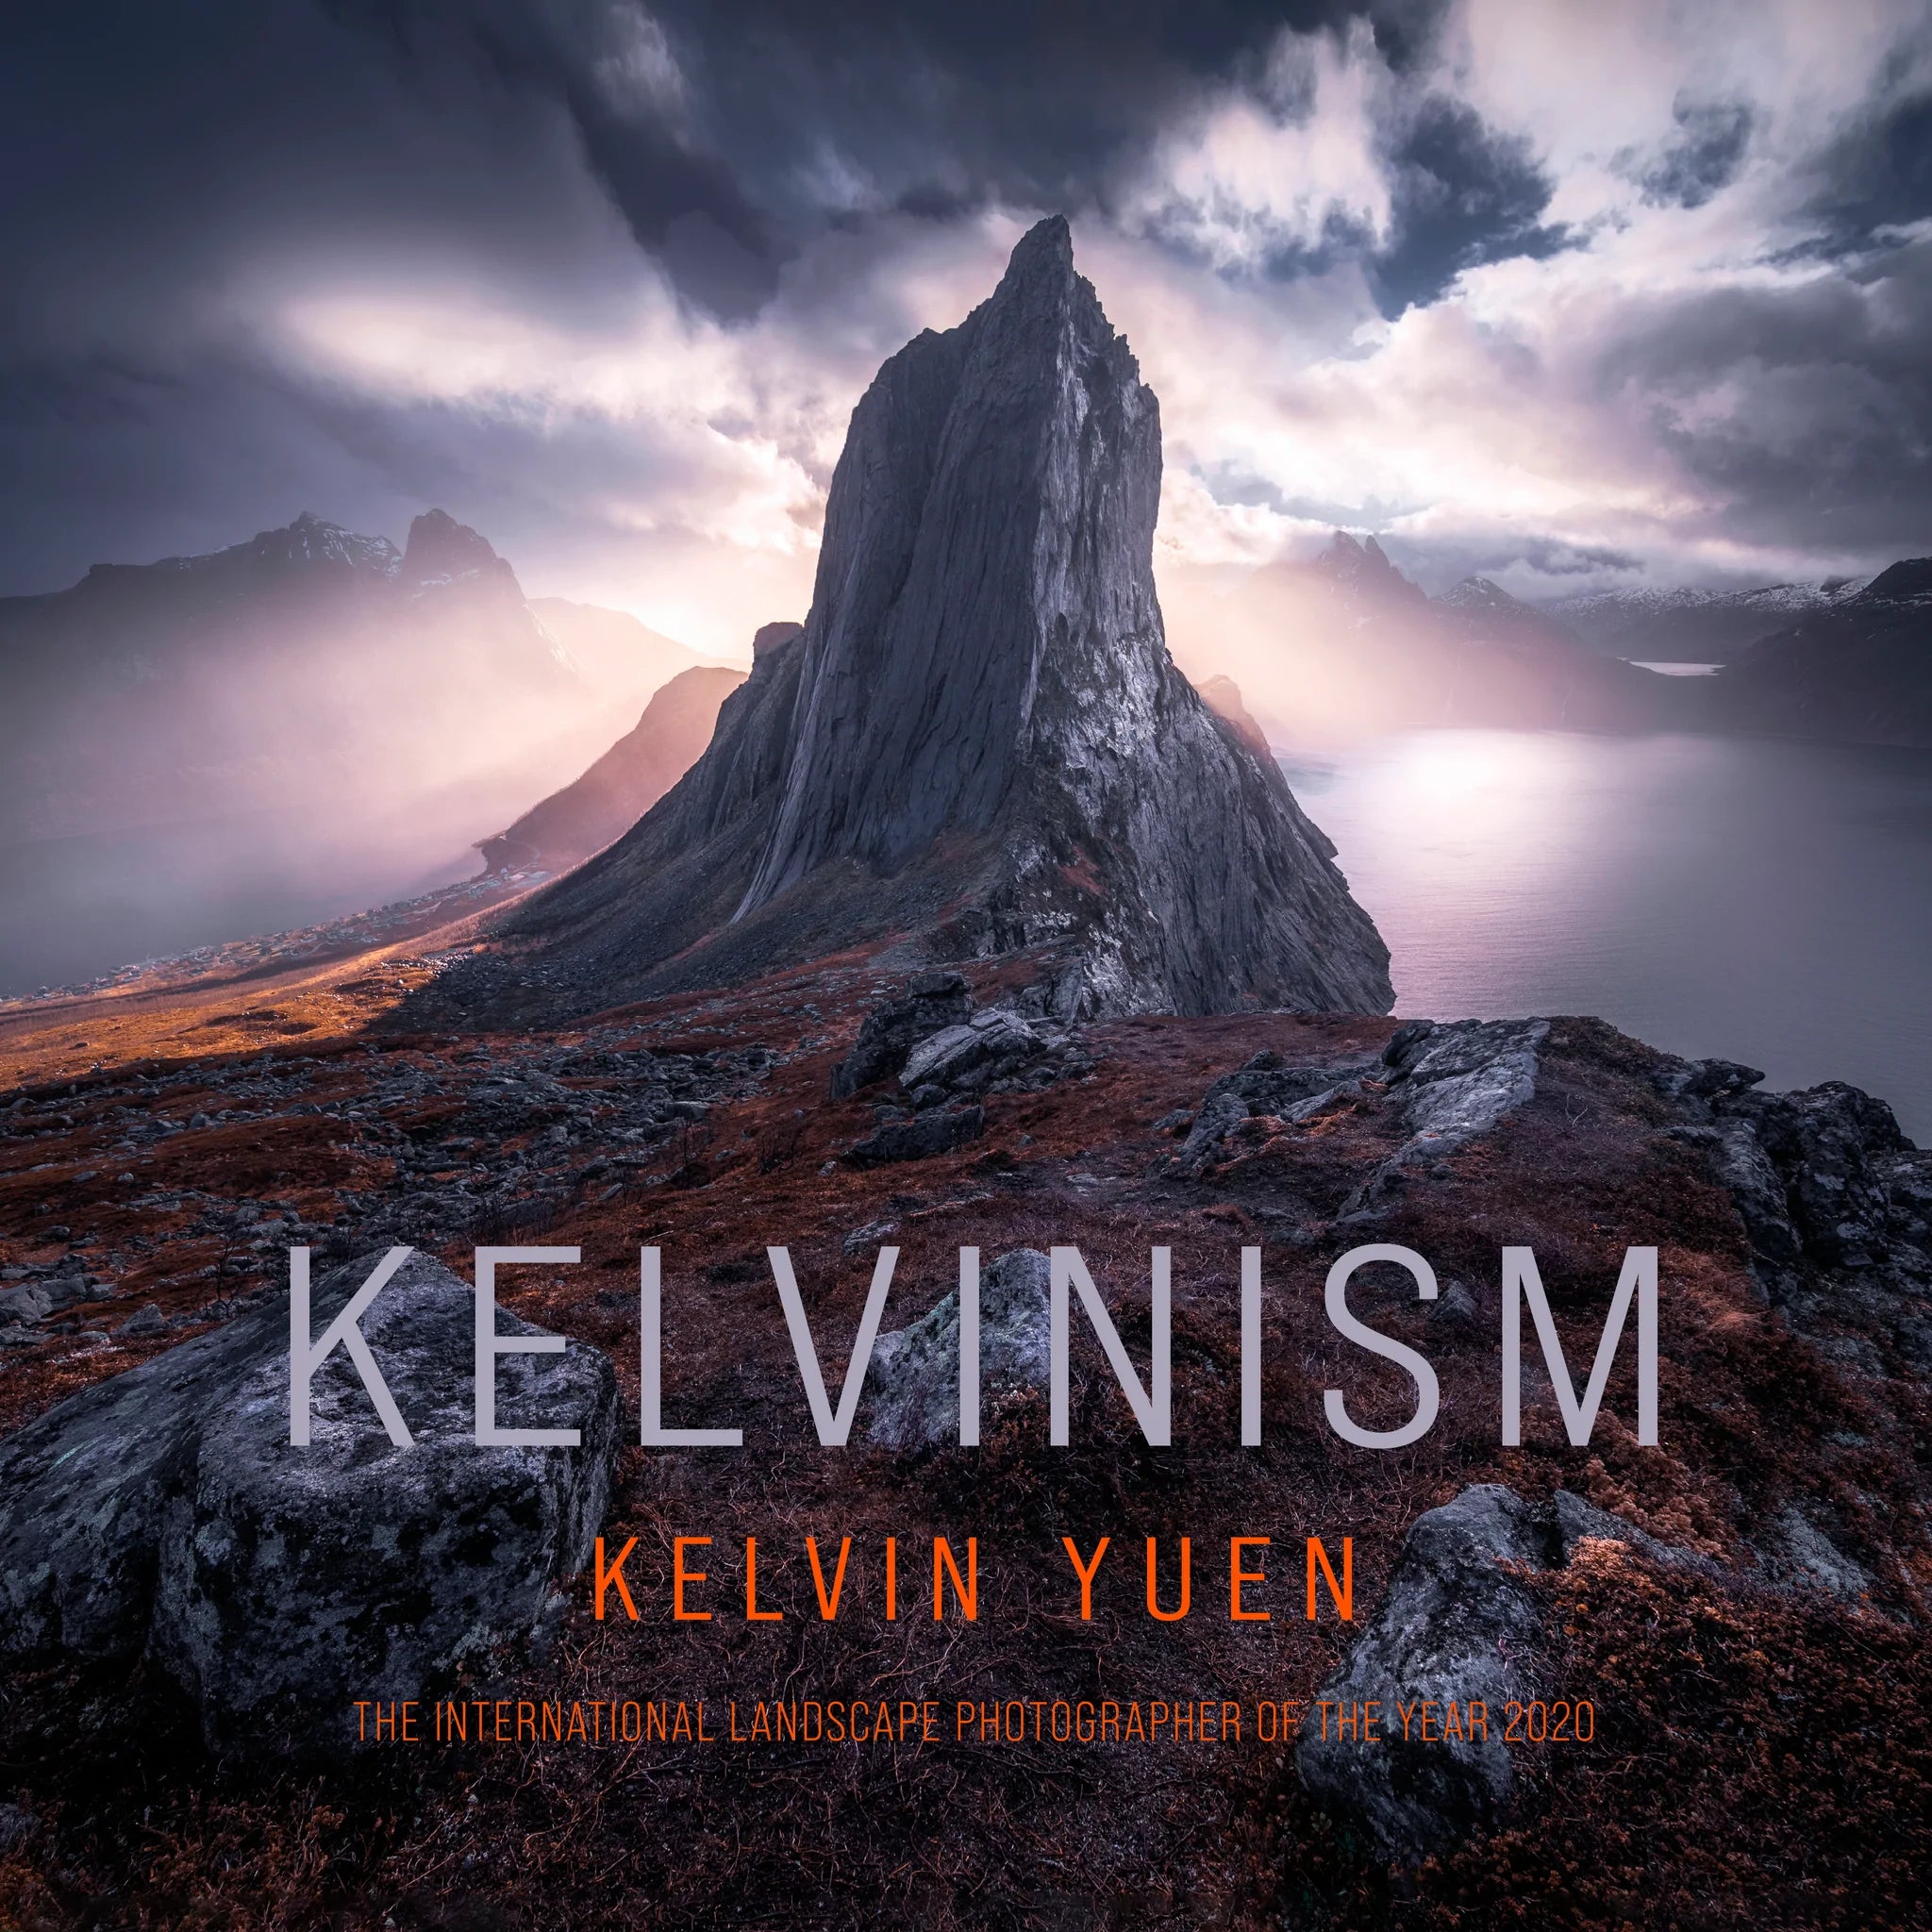 Kelvinism